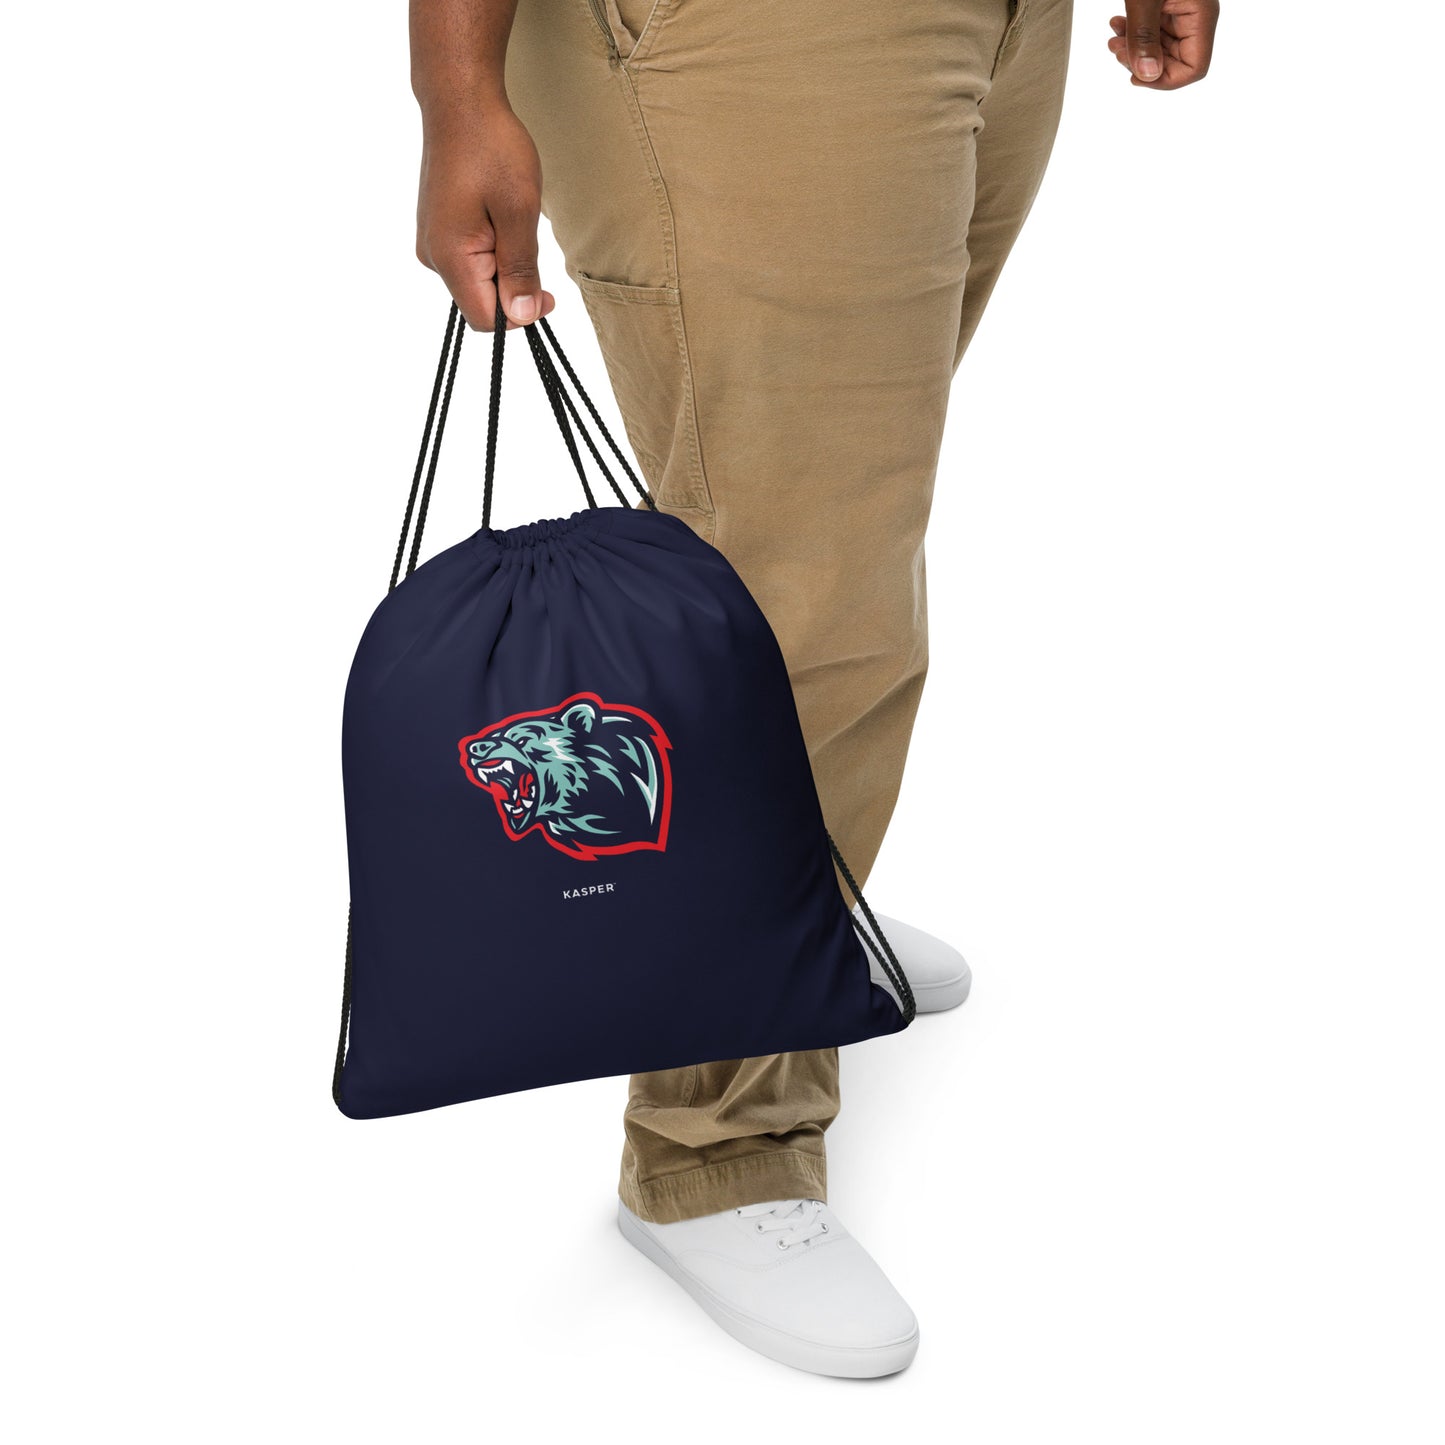 Grizzlies Drawstring Bag